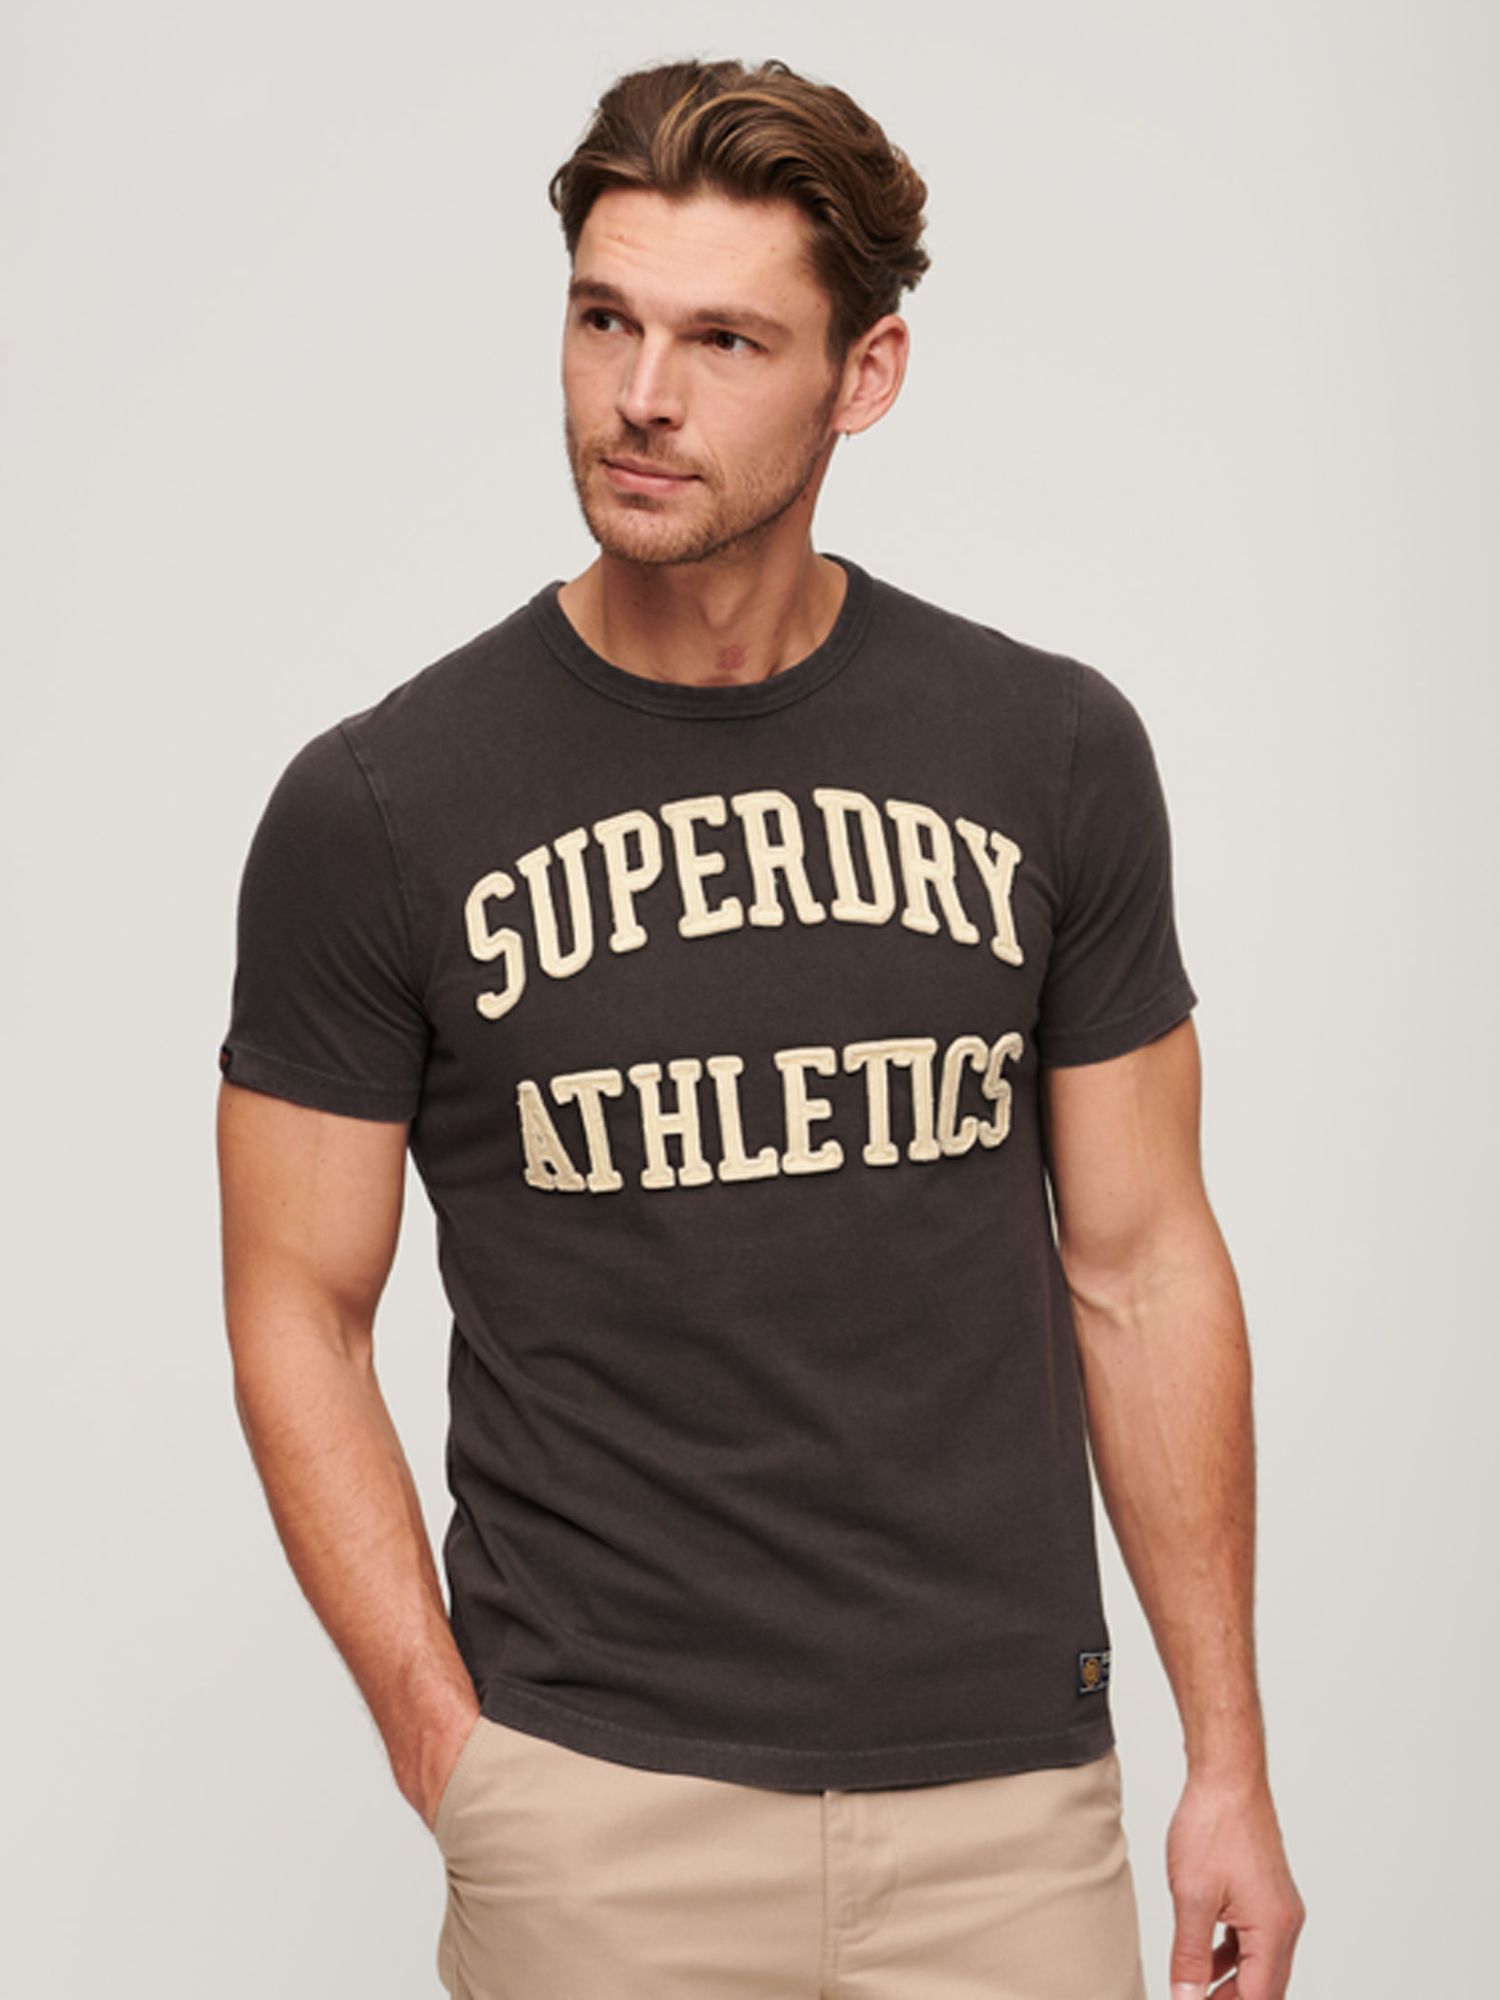 Superdry Vintage Athletic Short Sleeve T-Shirt, Dark Grey Green